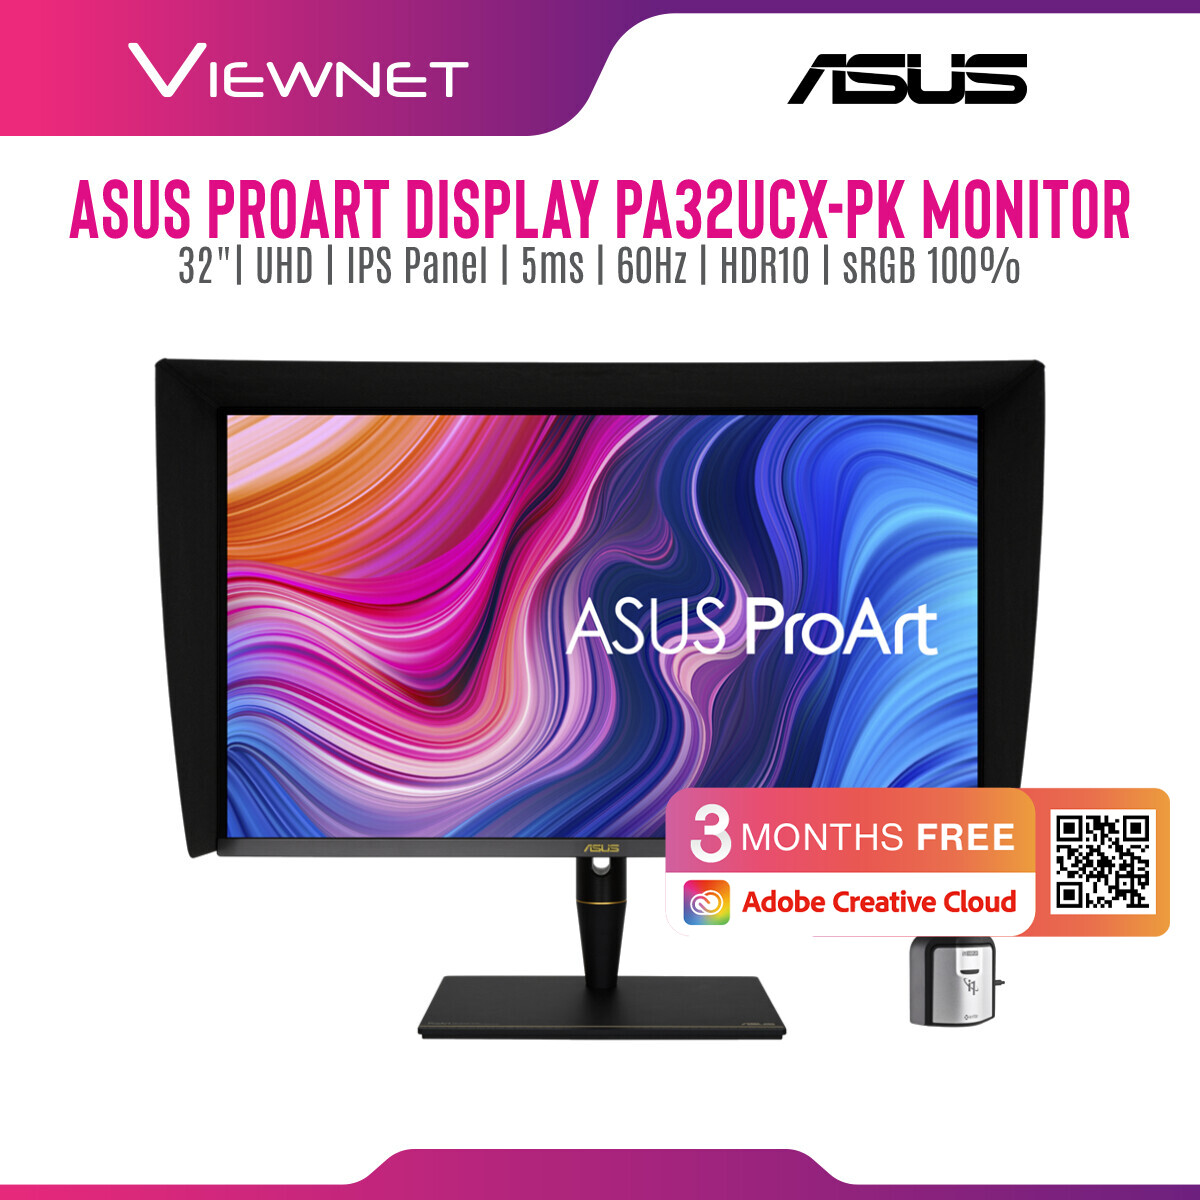 Asus ProArt Display PA32UCX-PK 4K HDR IPS Mini LED Professional Monitor - 32â€, 1200 nits, Off-Axis Contrast Optimization, 10 bit, Dolby Vision, HLG, 1152 zones, Î”E < 1, 99% DCI-P3, 99.5% Adobe RGB, 100% sRGB/Rec. 709 , Hardware Calibration, Thunderbolt